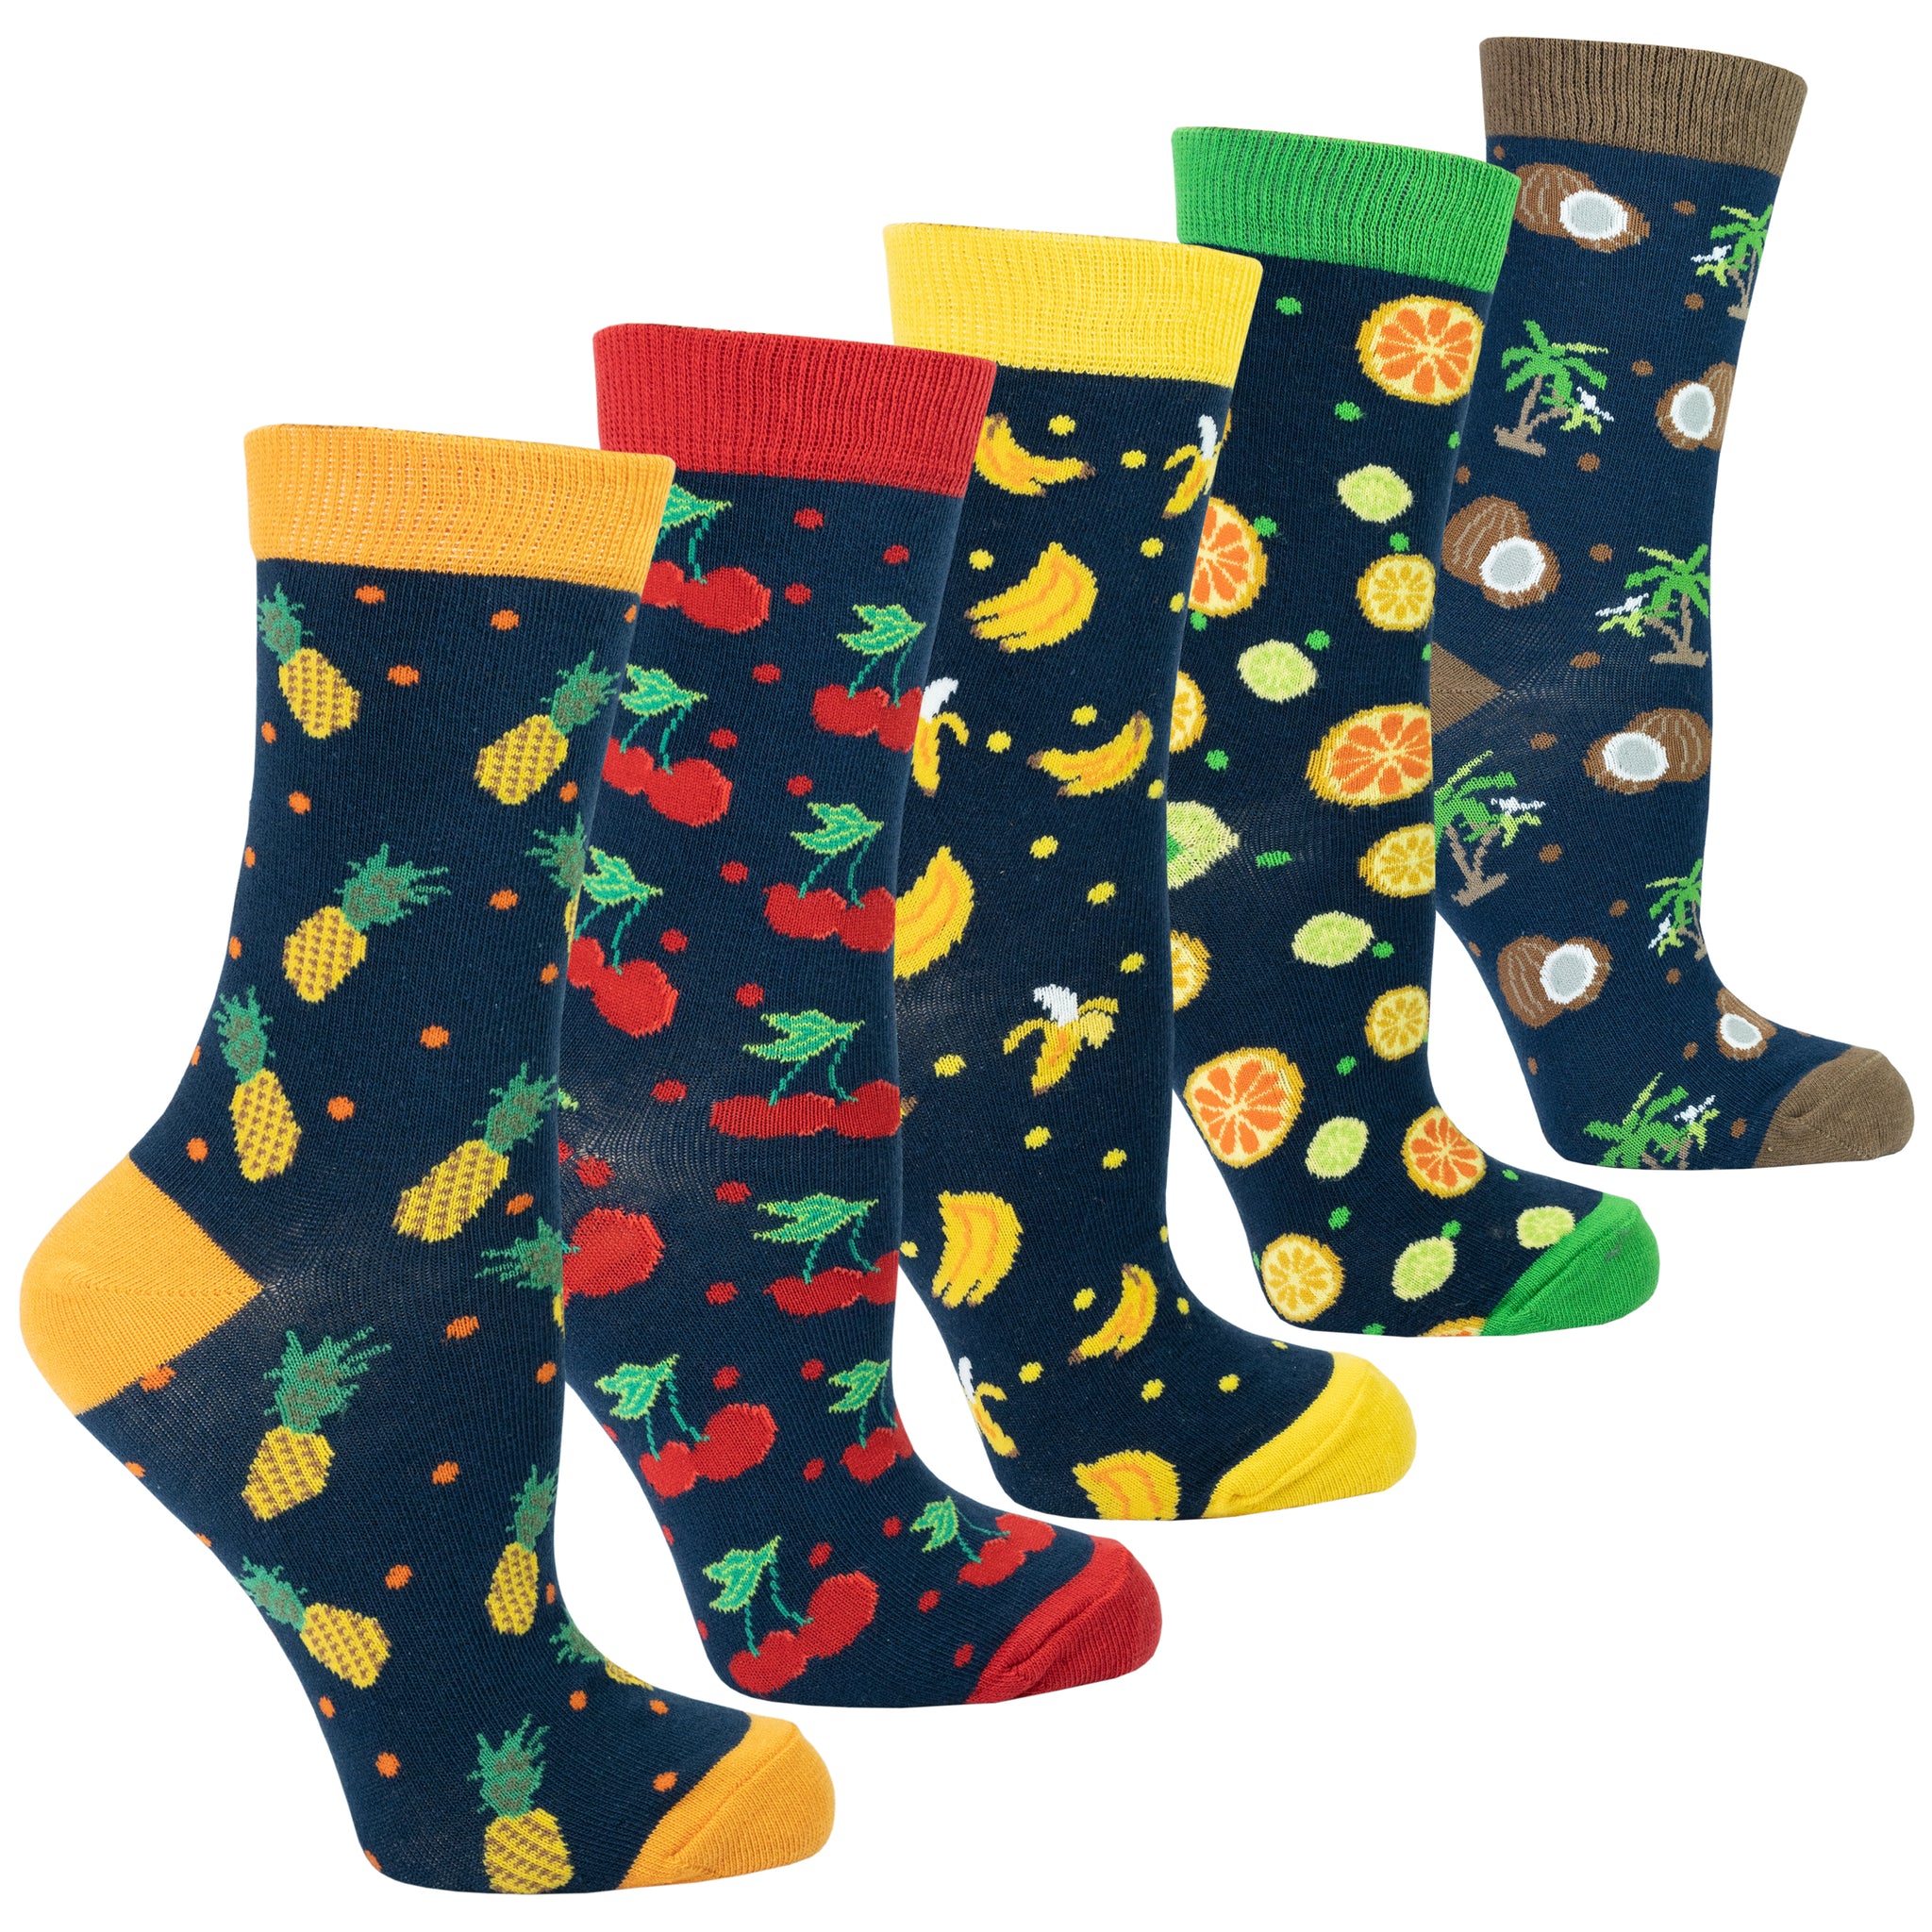 Women's Cheerful Fruits Socks Set - Socks n Socks